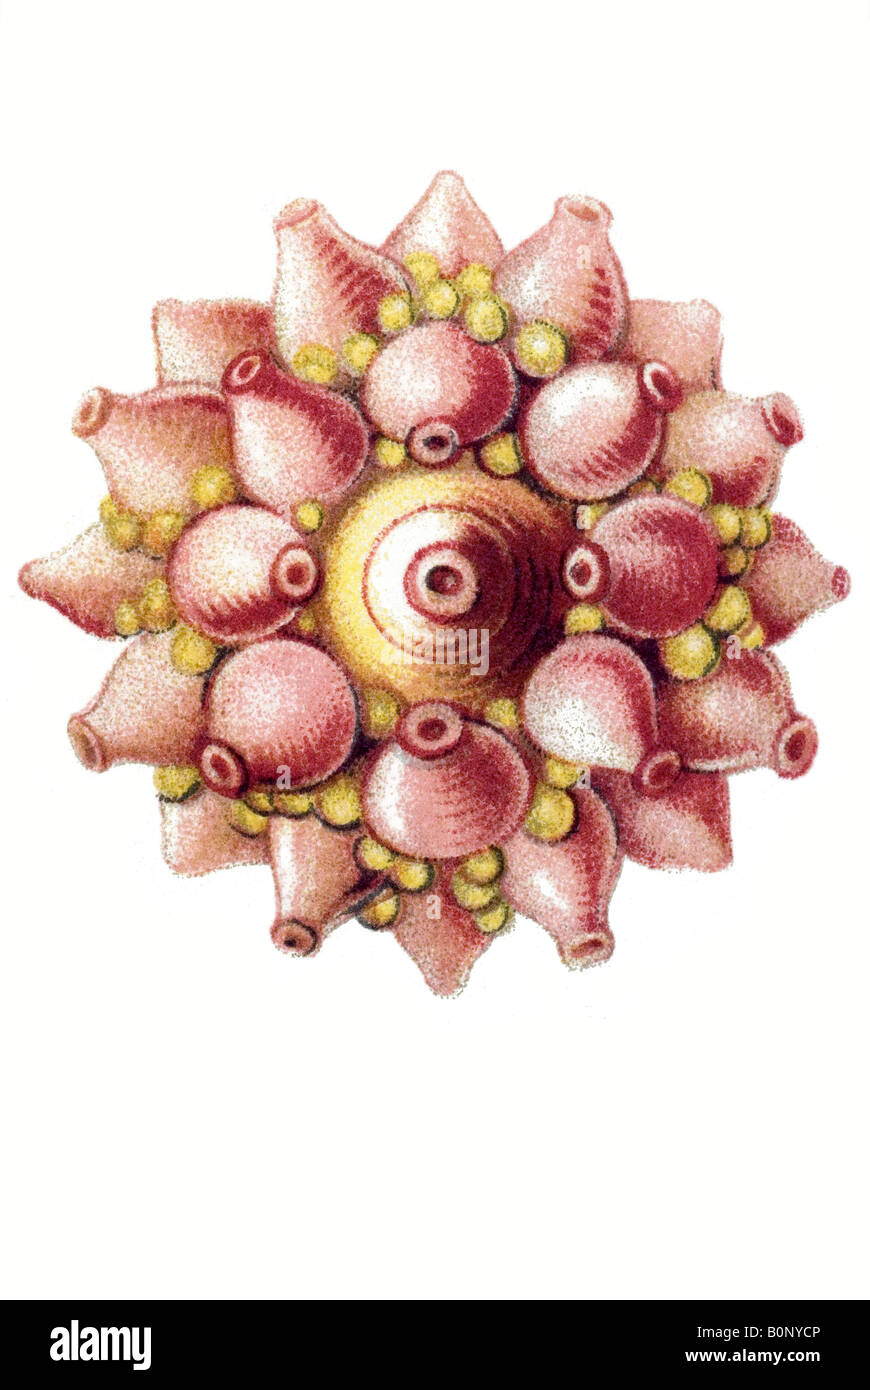 Nombre Siphonophorae Porpema medusa, Haeckel, art nouveau de Europa en el siglo XX. Foto de stock